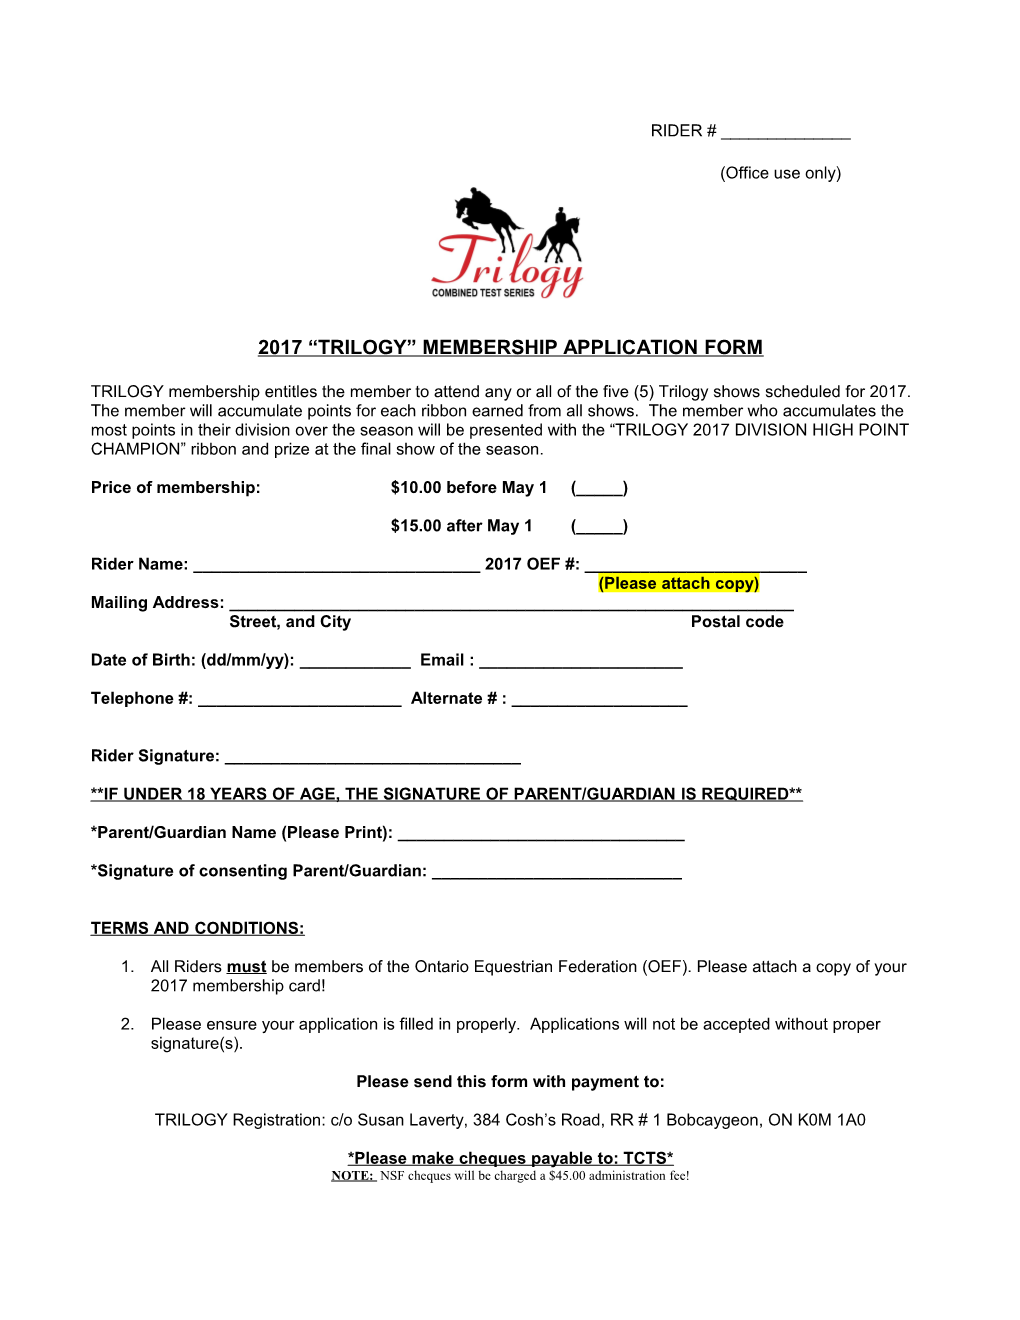 2017 Trilogy Membership Application Form